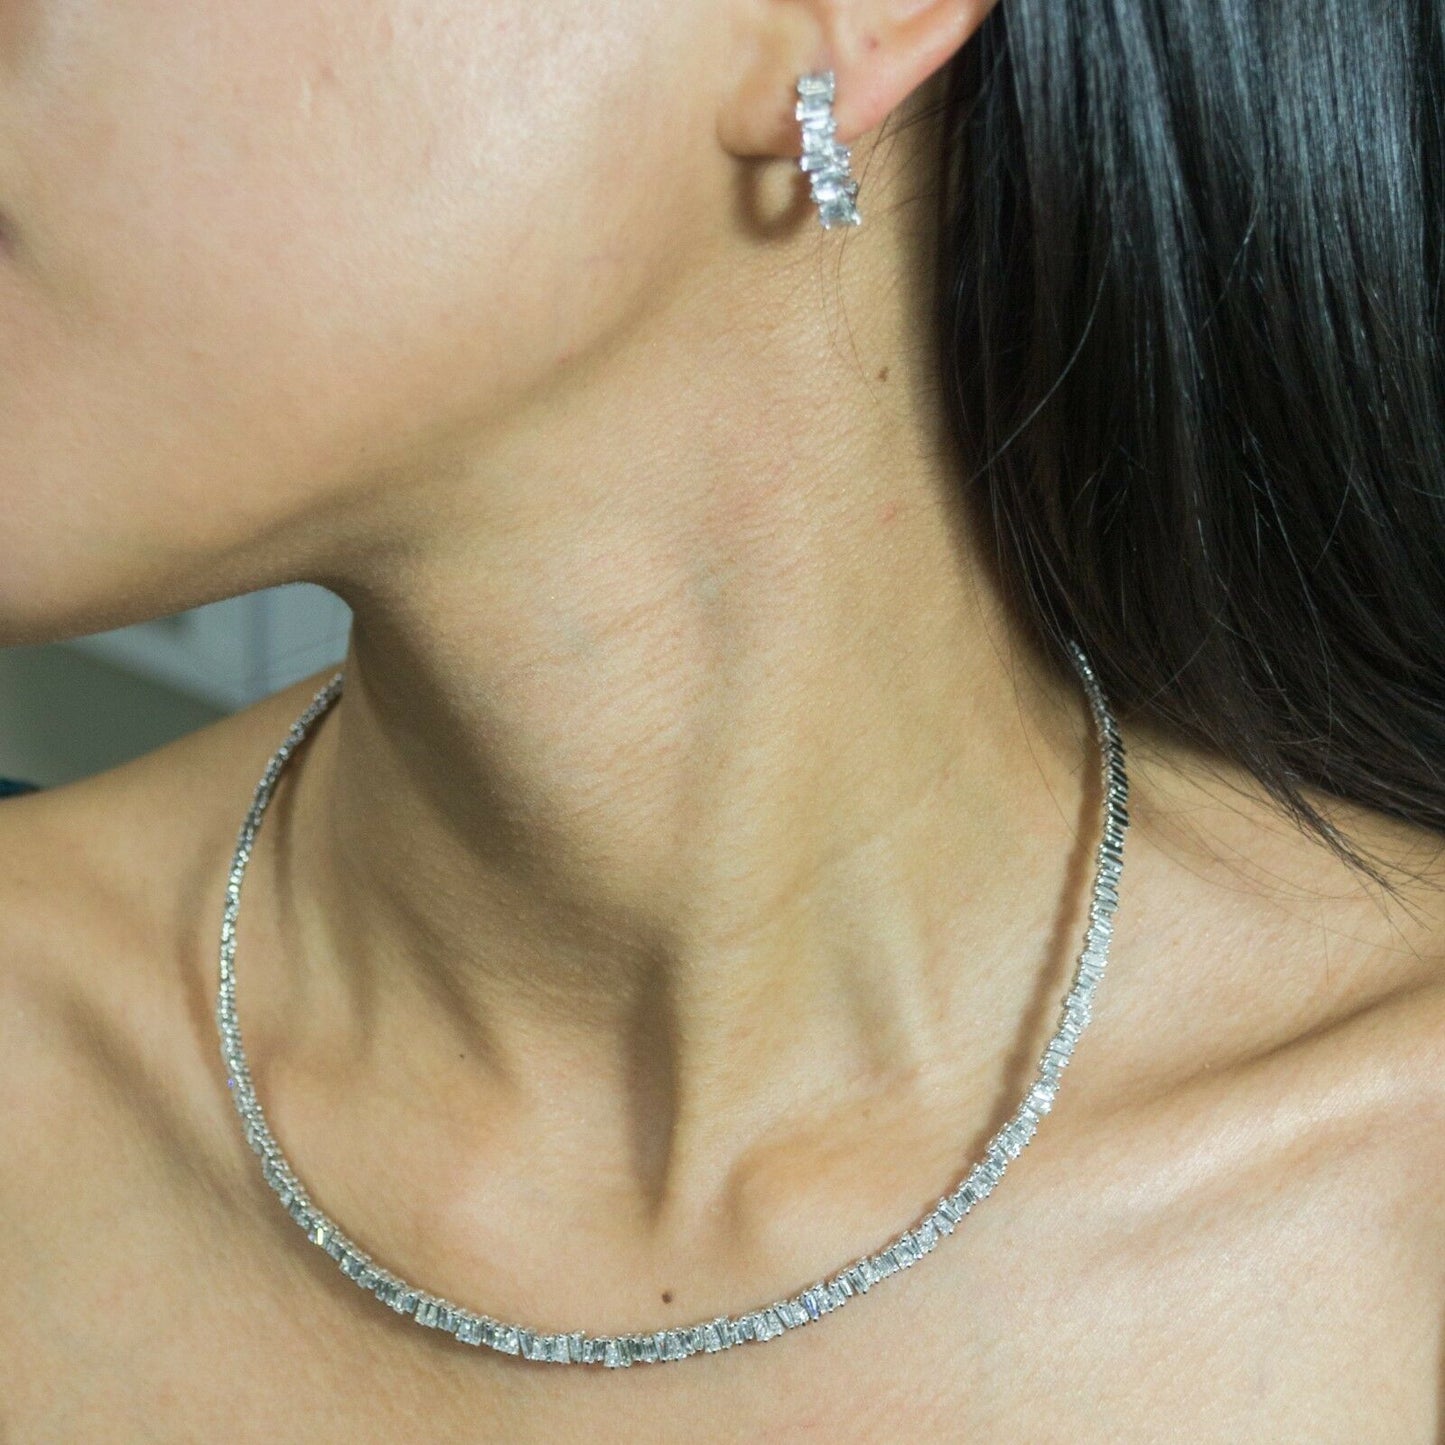 14K Gold 3.95 CT Baguette Cut Diamond Choker Necklace Certified Natural